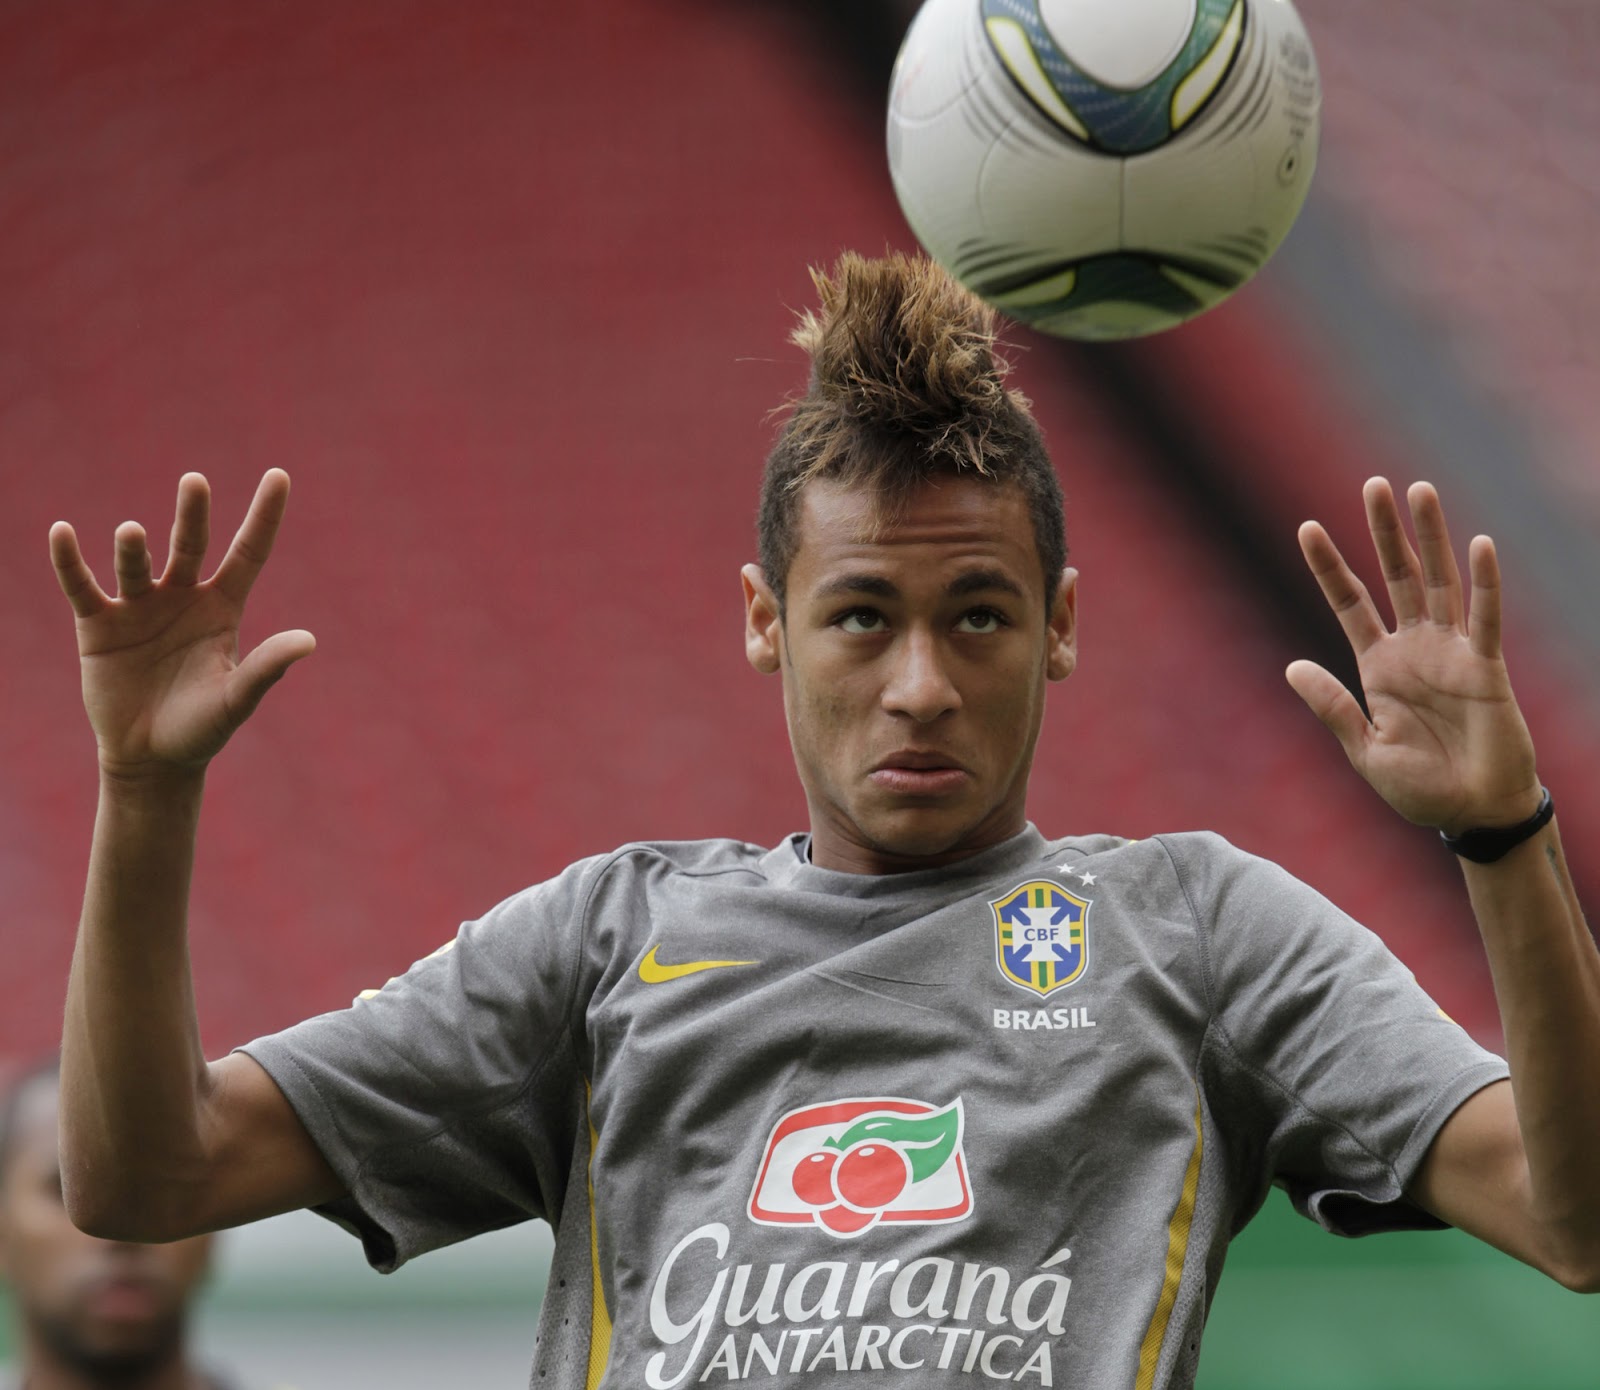 http://2.bp.blogspot.com/-H-0BGMg2r9Y/UEFvOniTuNI/AAAAAAAAF1M/I3NumpgogZs/s1600/Neymar+Training+Schedule.jpg